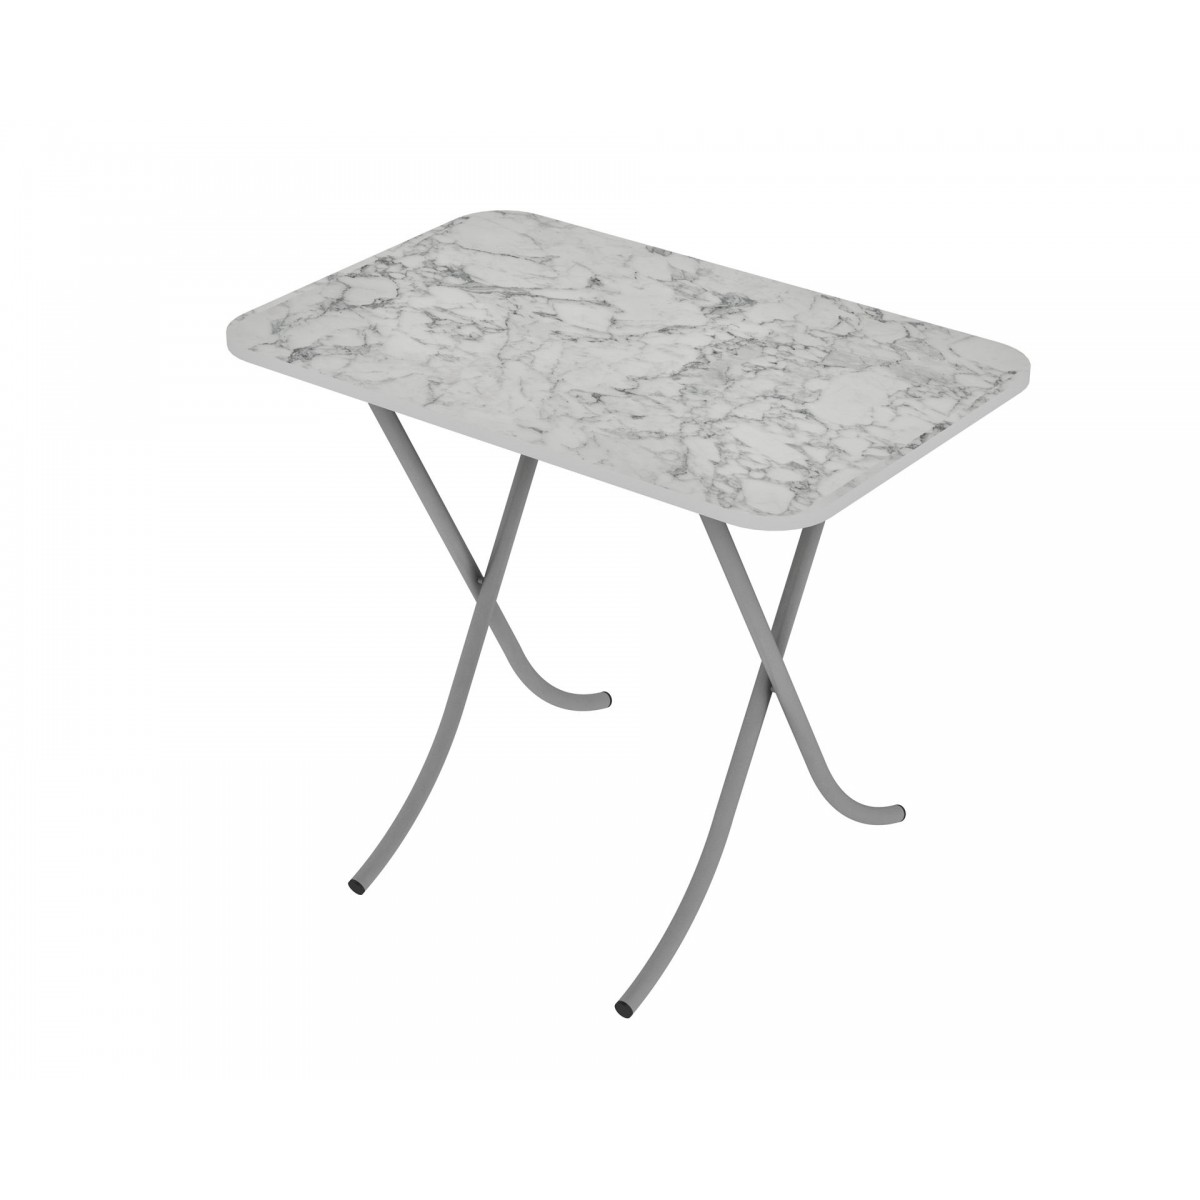 Tραπέζι "MOUNTAIN TOP" πτυσσόμενο από mdf/μέταλλο σε χρώμα λευκό μαρμάρου 60x90x75